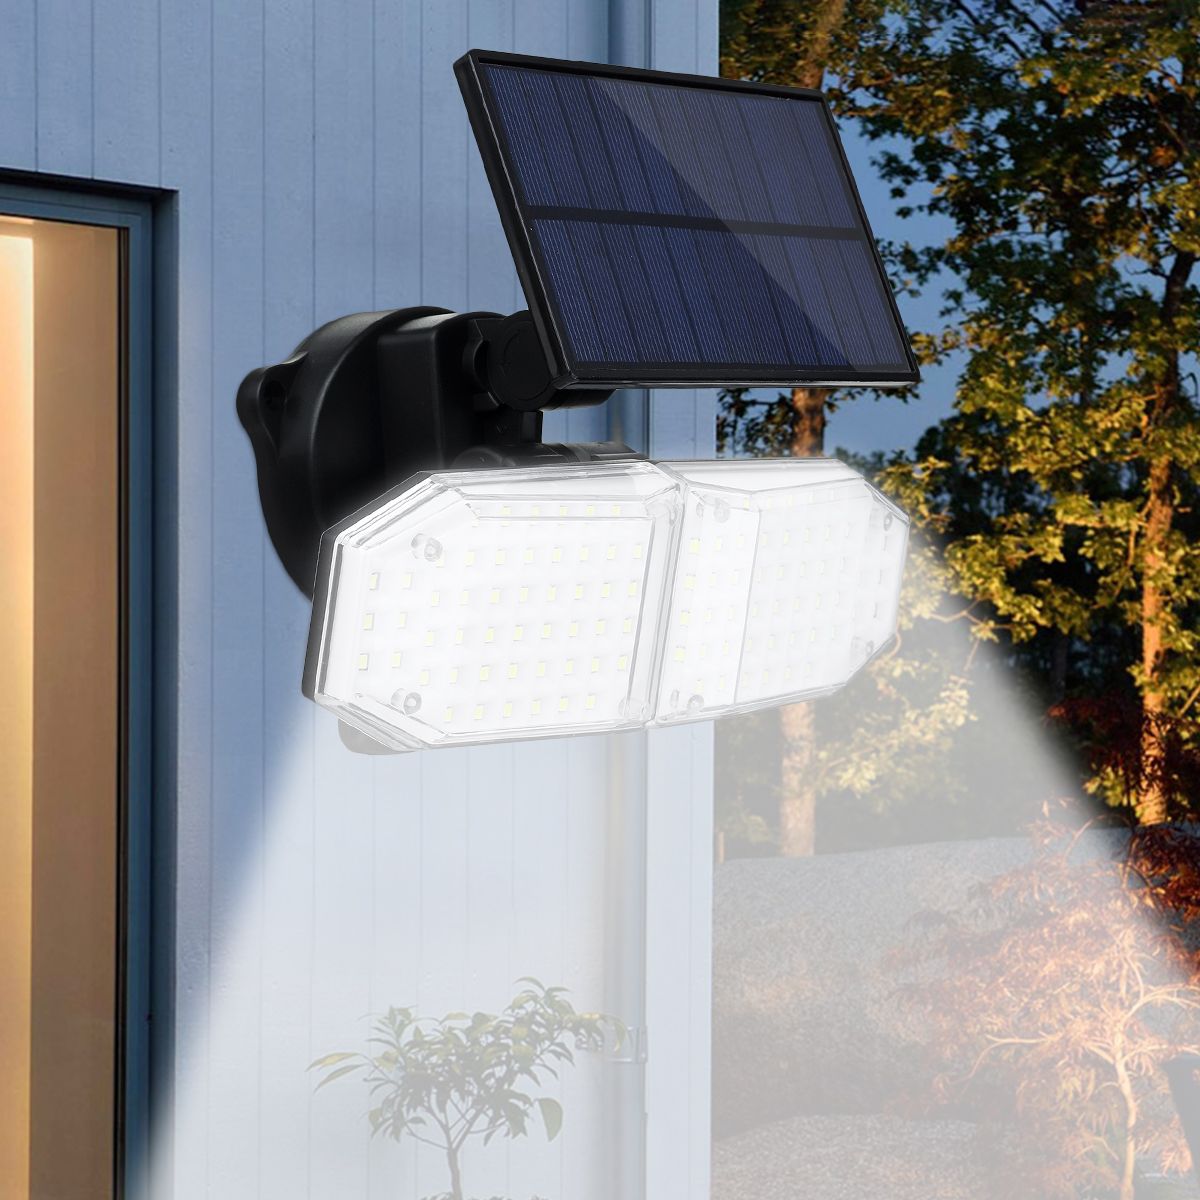 Dual-Head-100120LED-Solar-Wall-Light-IP65-PIR-Motion-Sensor-Garden-Street-Lamp-Waterproof-Outdoor-De-1735429